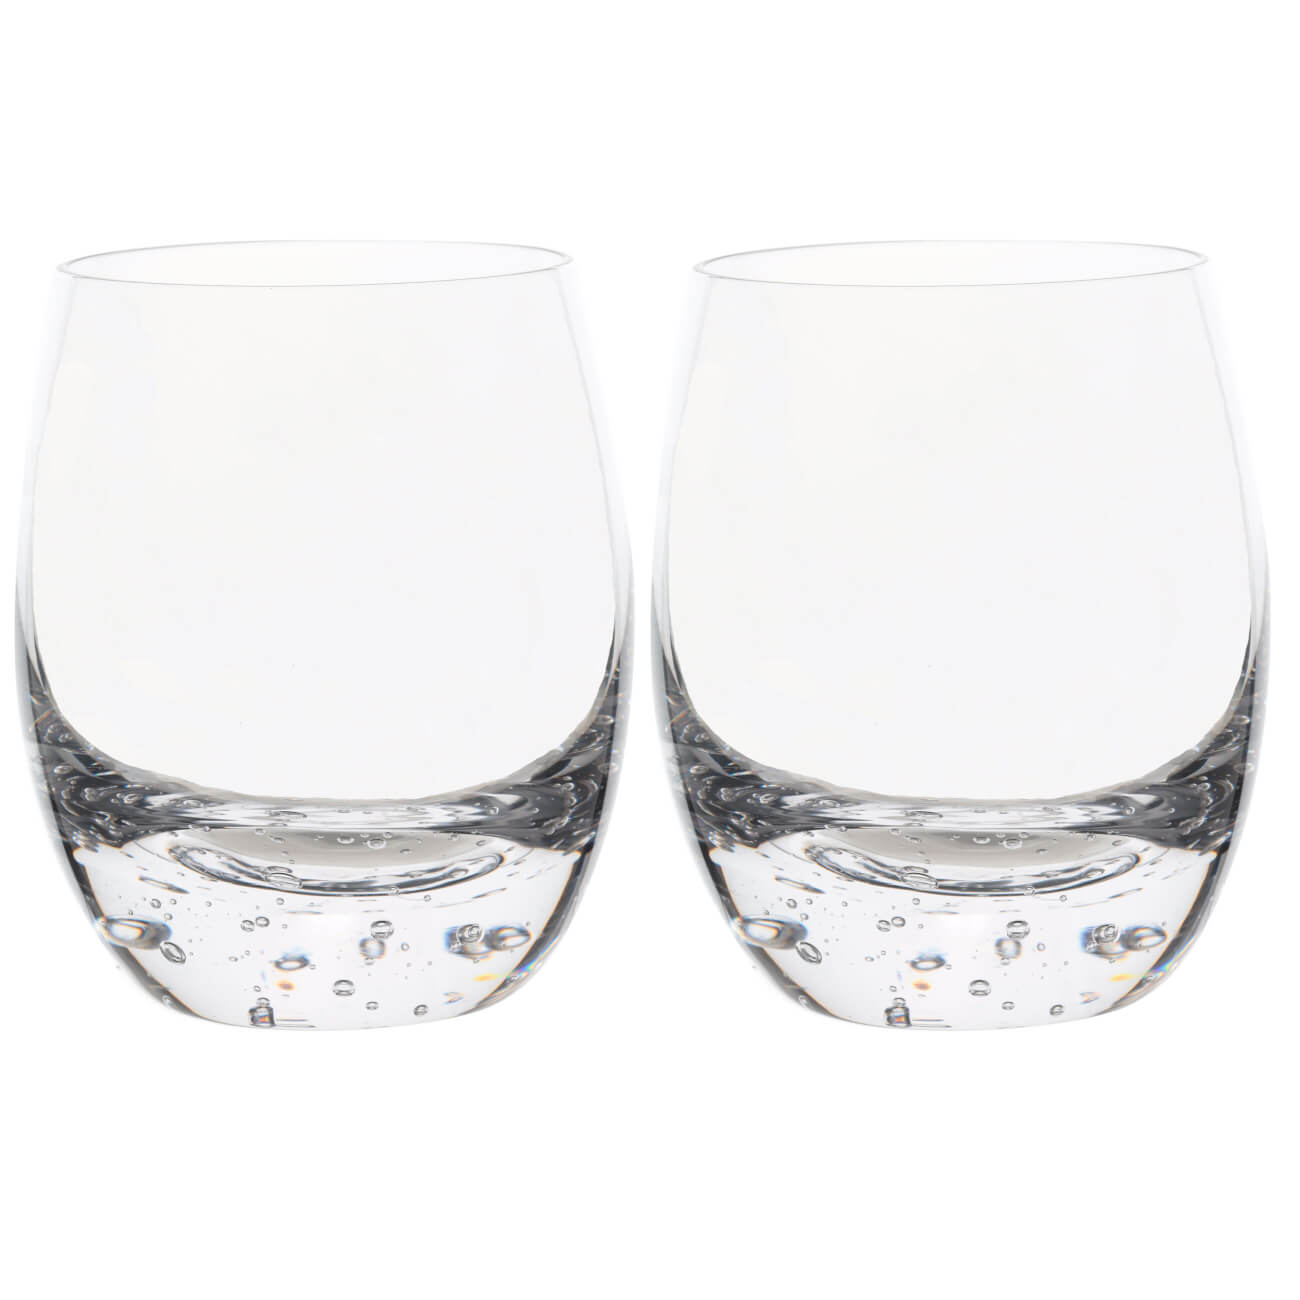 стакан для виски crystalex идеал набор 6 шт стекло 00895 Стакан для виски, 380 мл, 2 шт, стекло, Drip